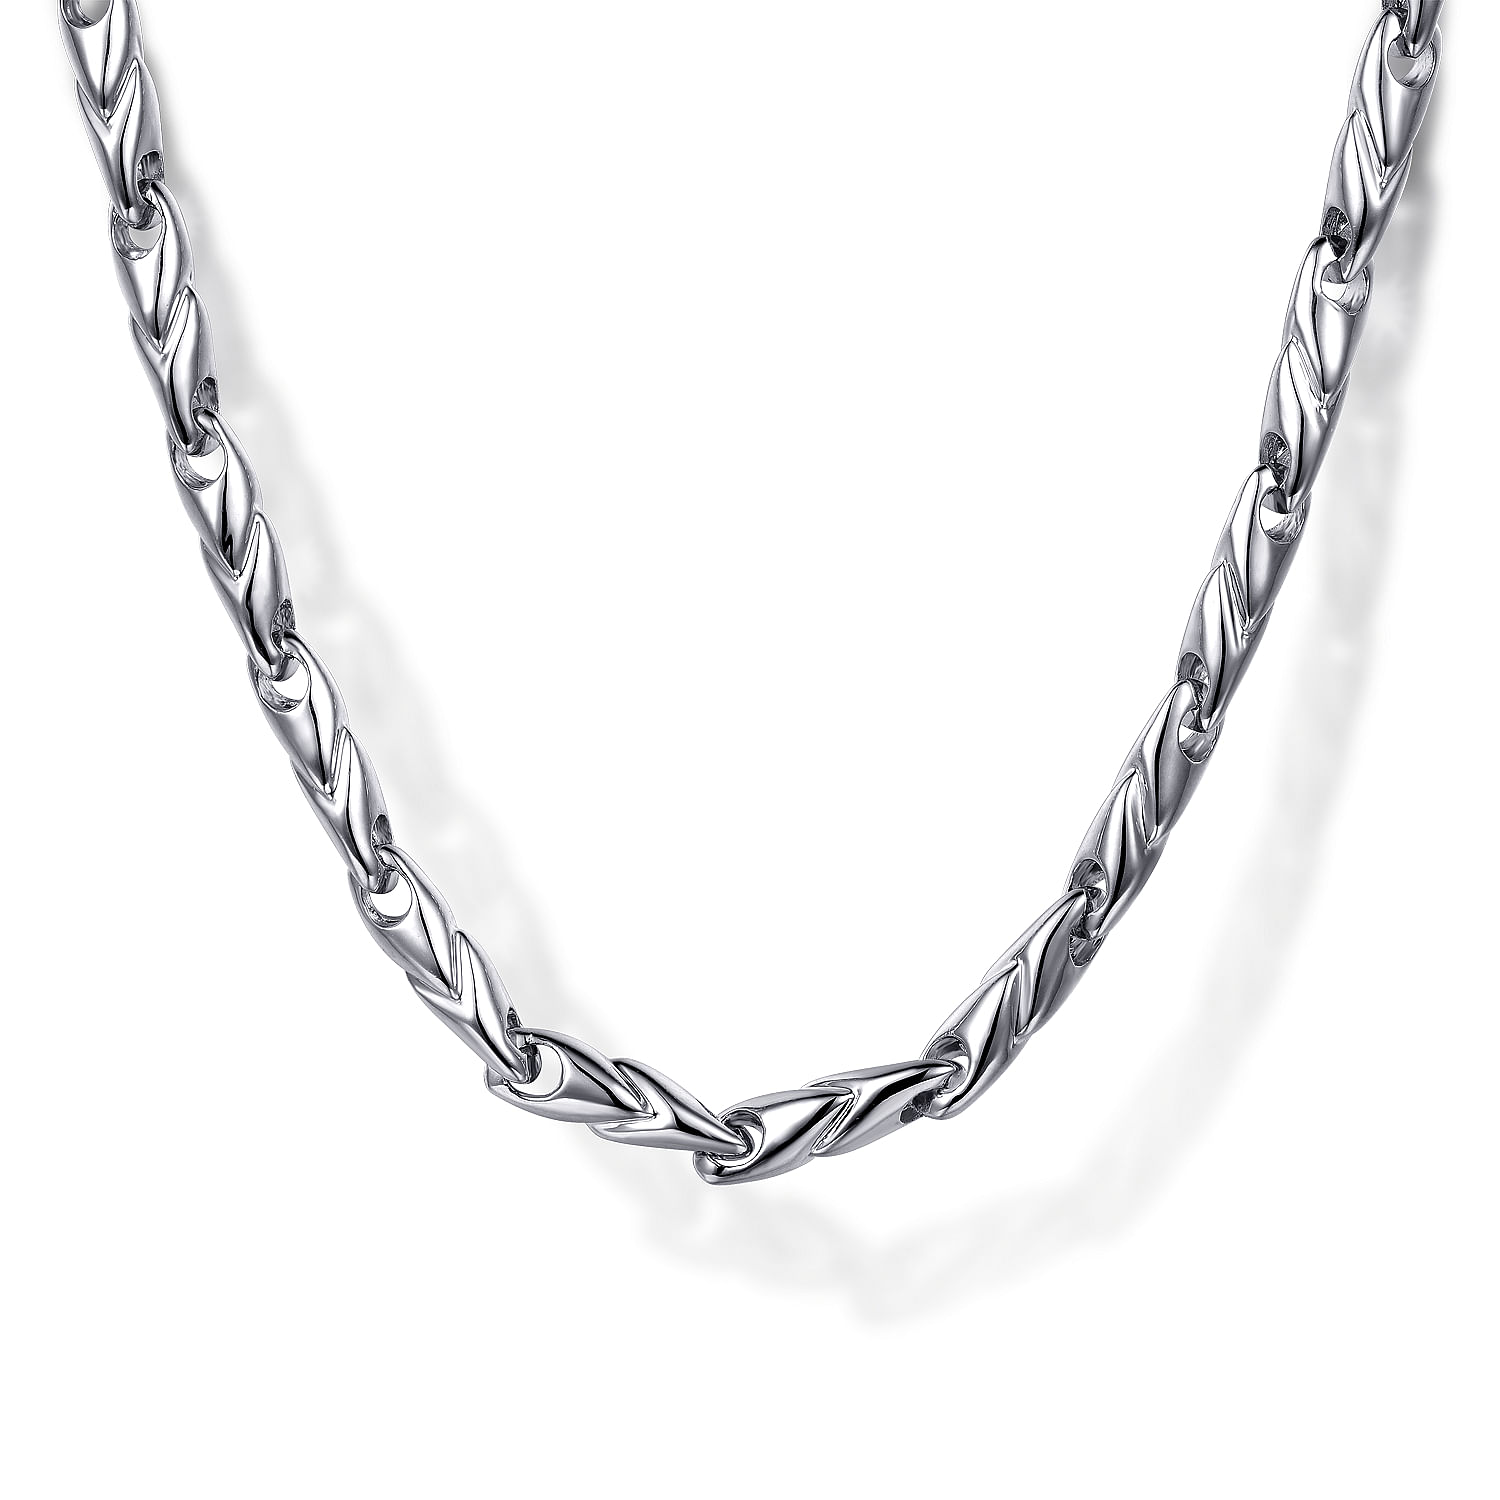 24 Inch 925 Sterling Silver Men's Chain Necklace, NKM6767-24SVJJJ